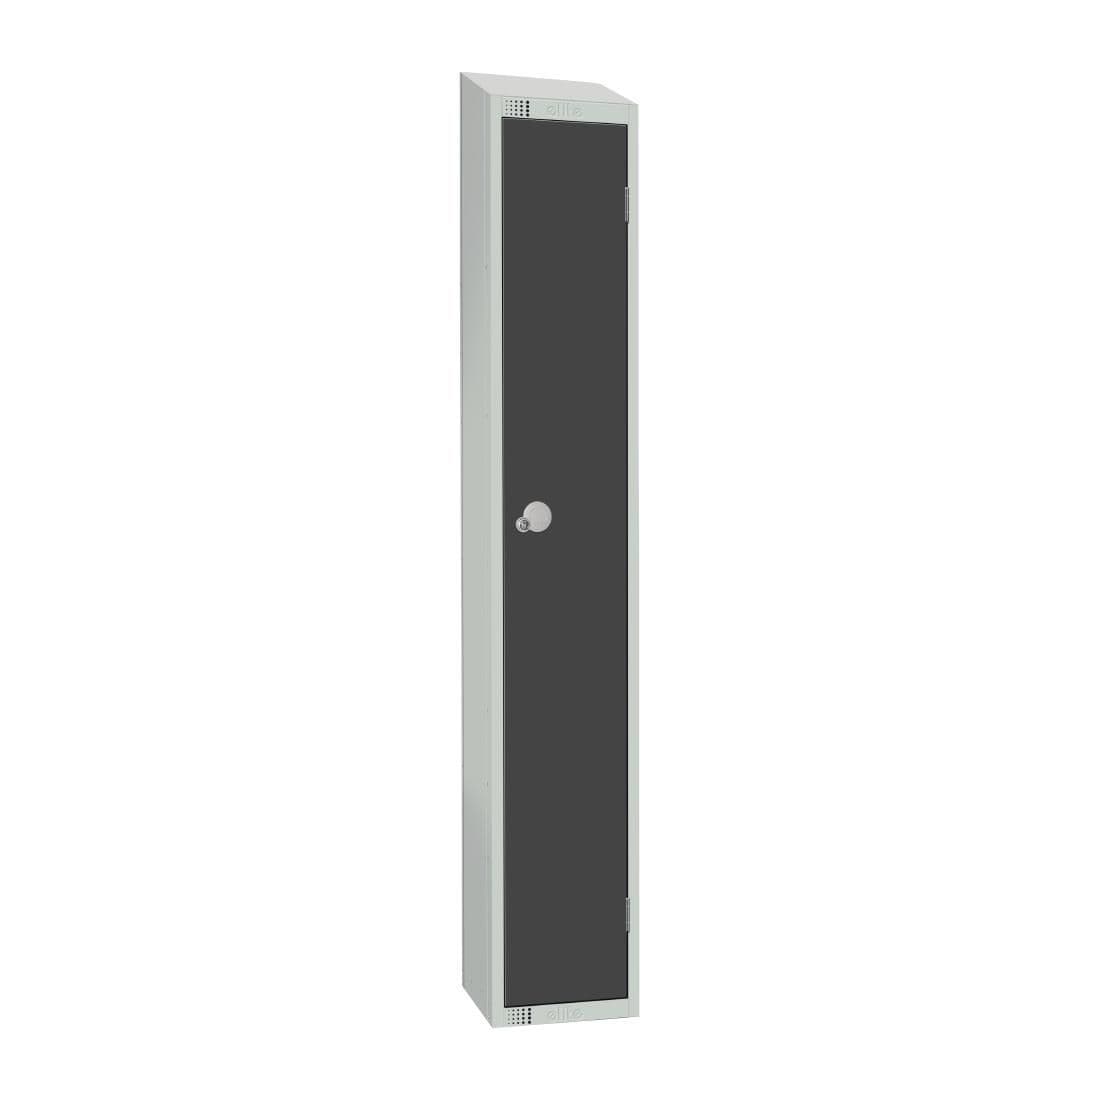 GR677-CLS Elite Single Door Manual Combination Locker Locker Graphite Grey JD Catering Equipment Solutions Ltd